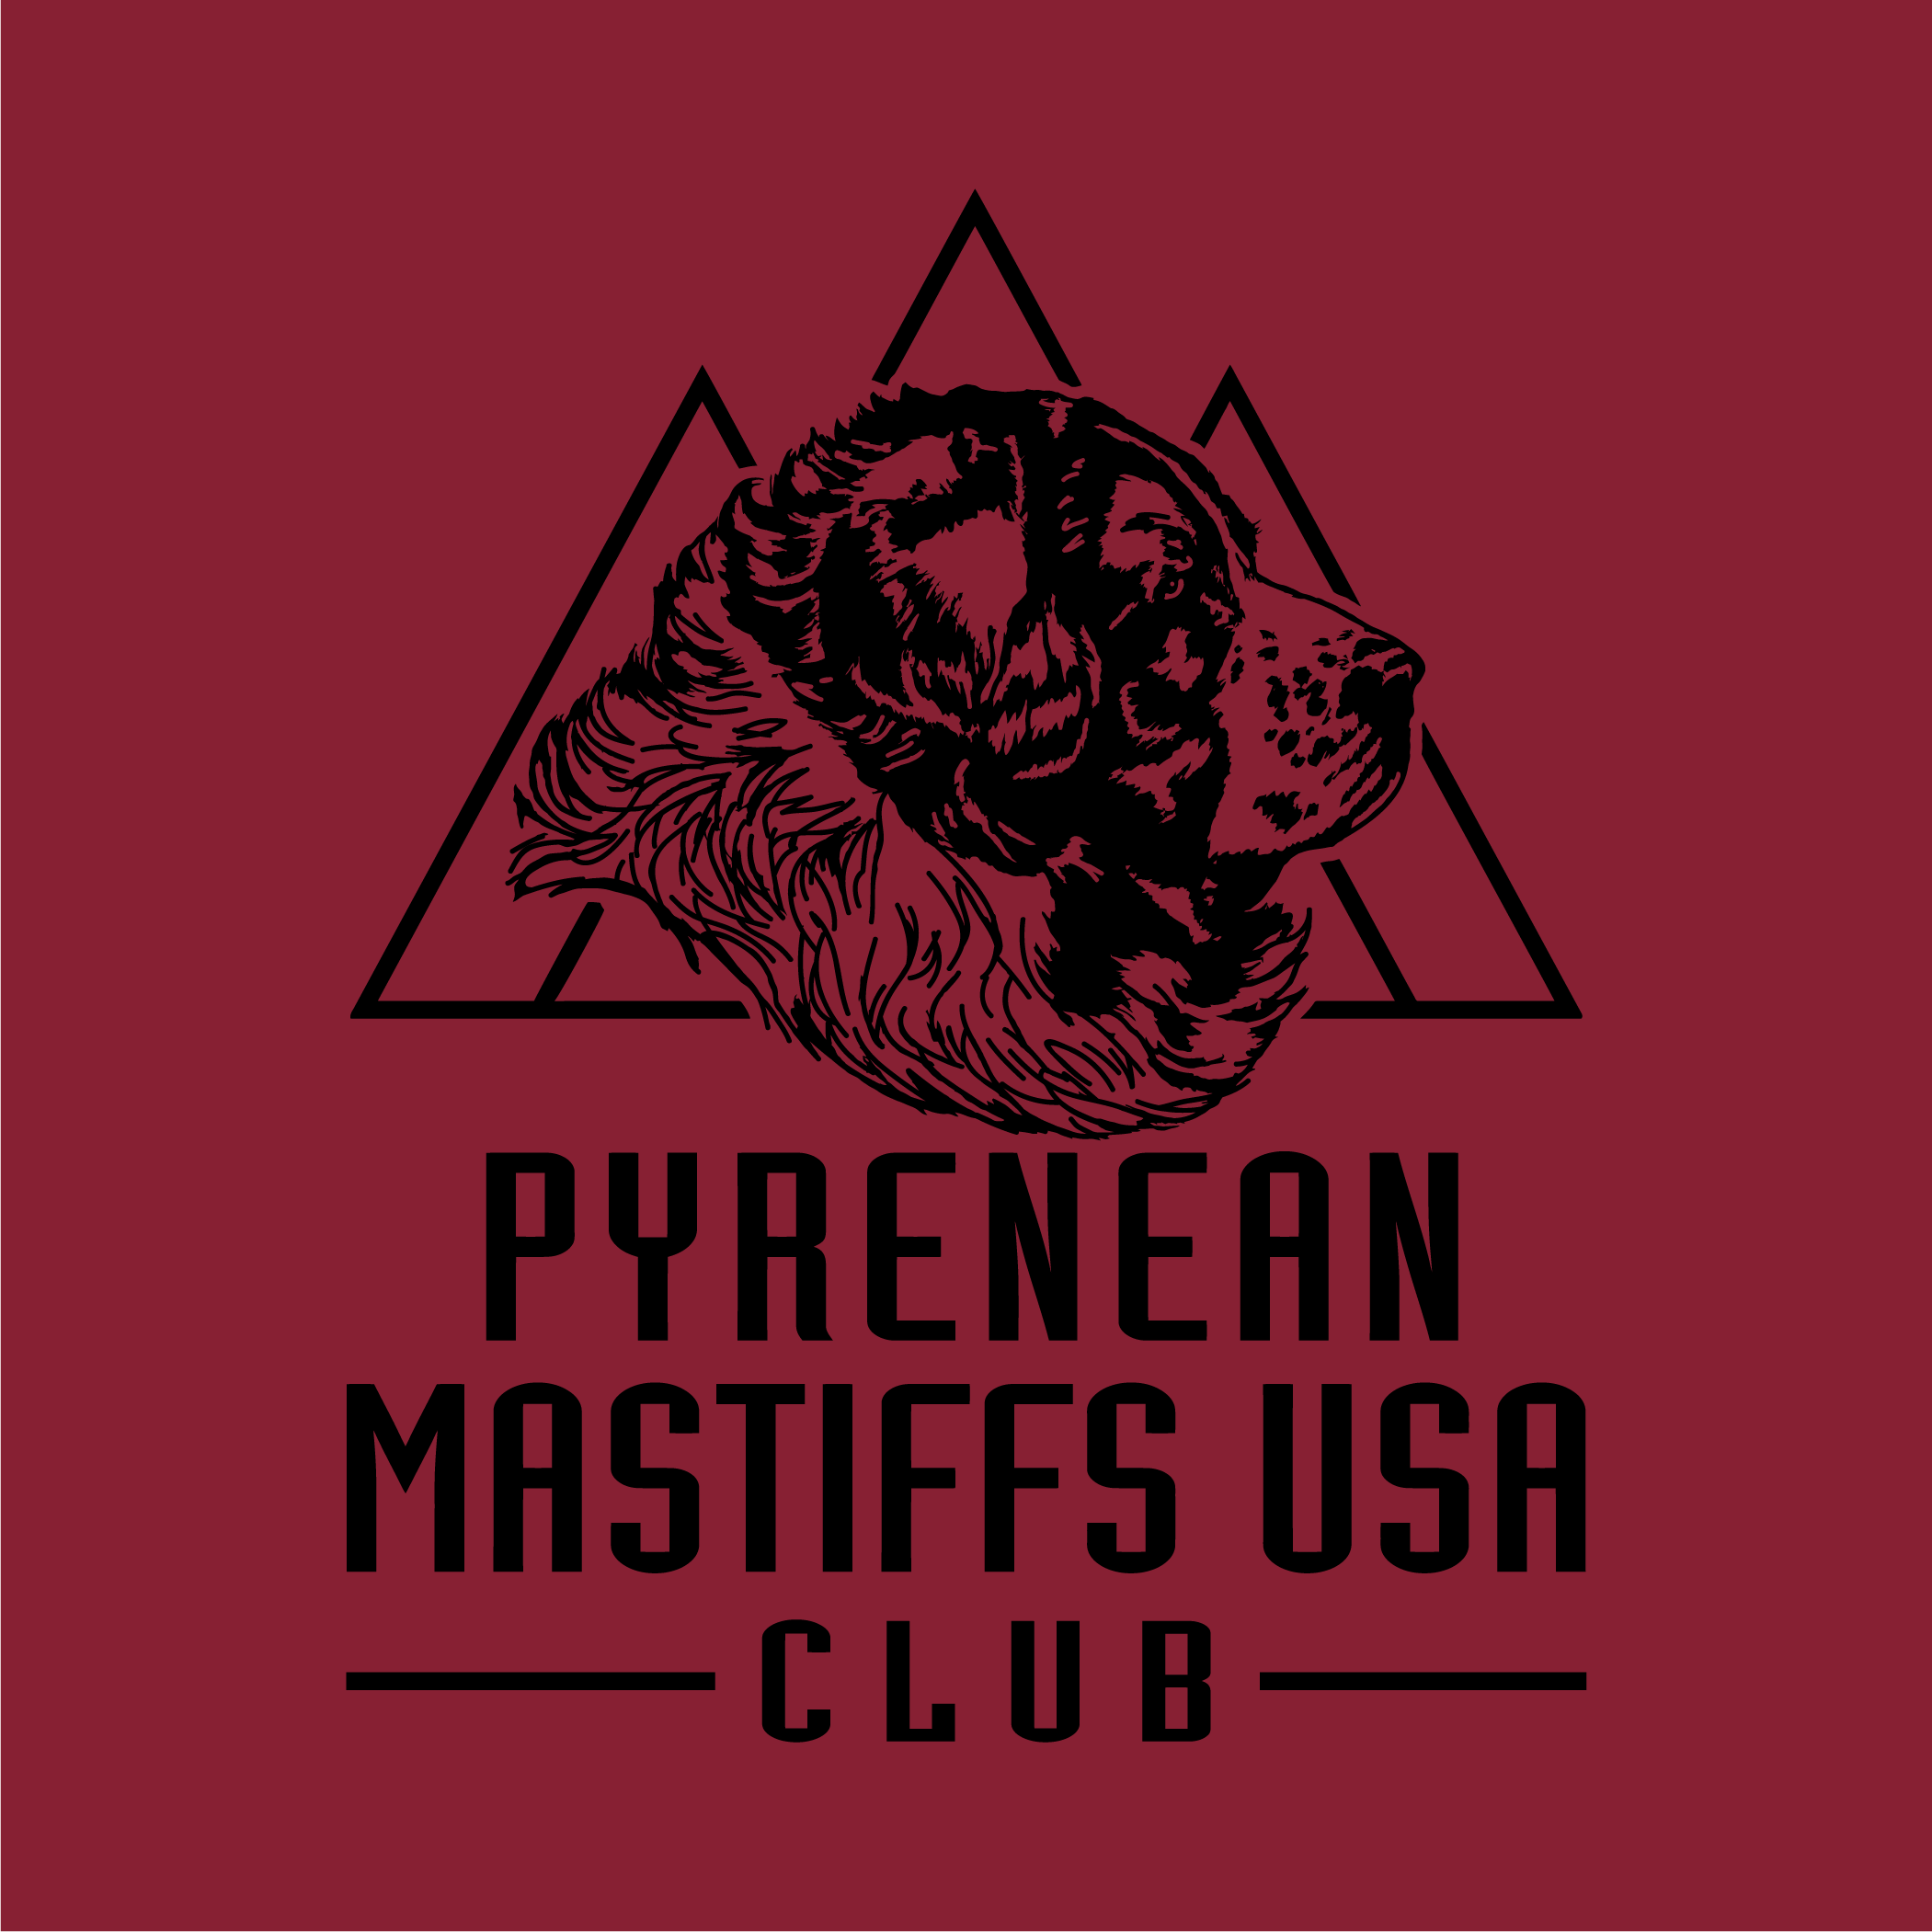 Pyrenean Mastiff USA shirt design - zoomed